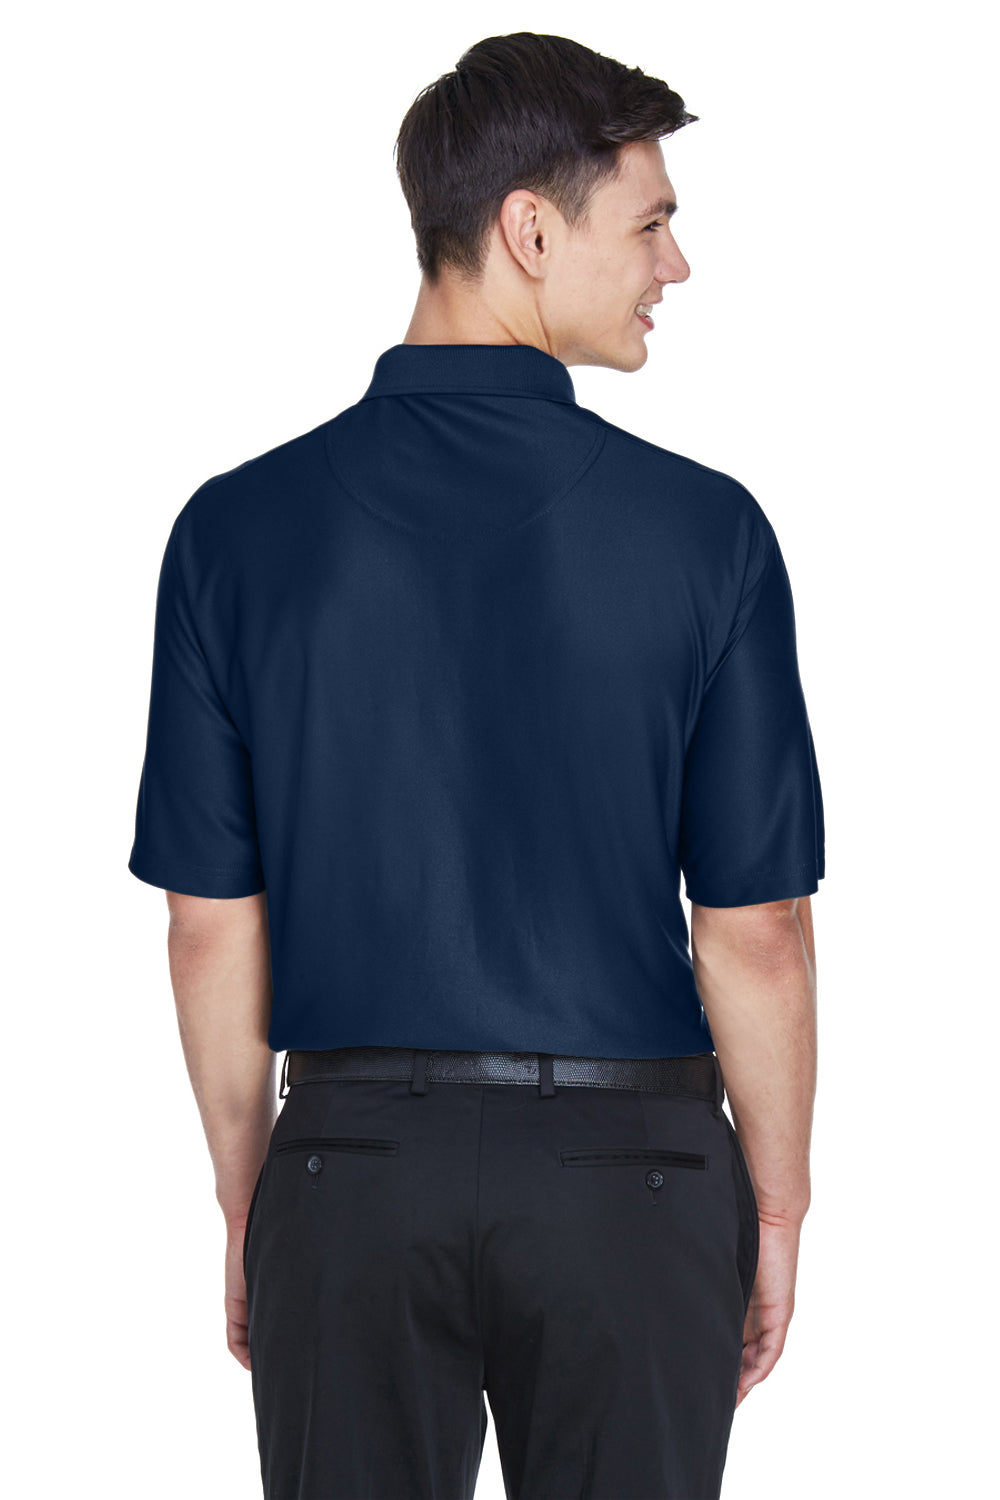 UltraClub 8415 Mens Cool & Dry Elite Performance Moisture Wicking Short Sleeve Polo Shirt Navy Blue Back